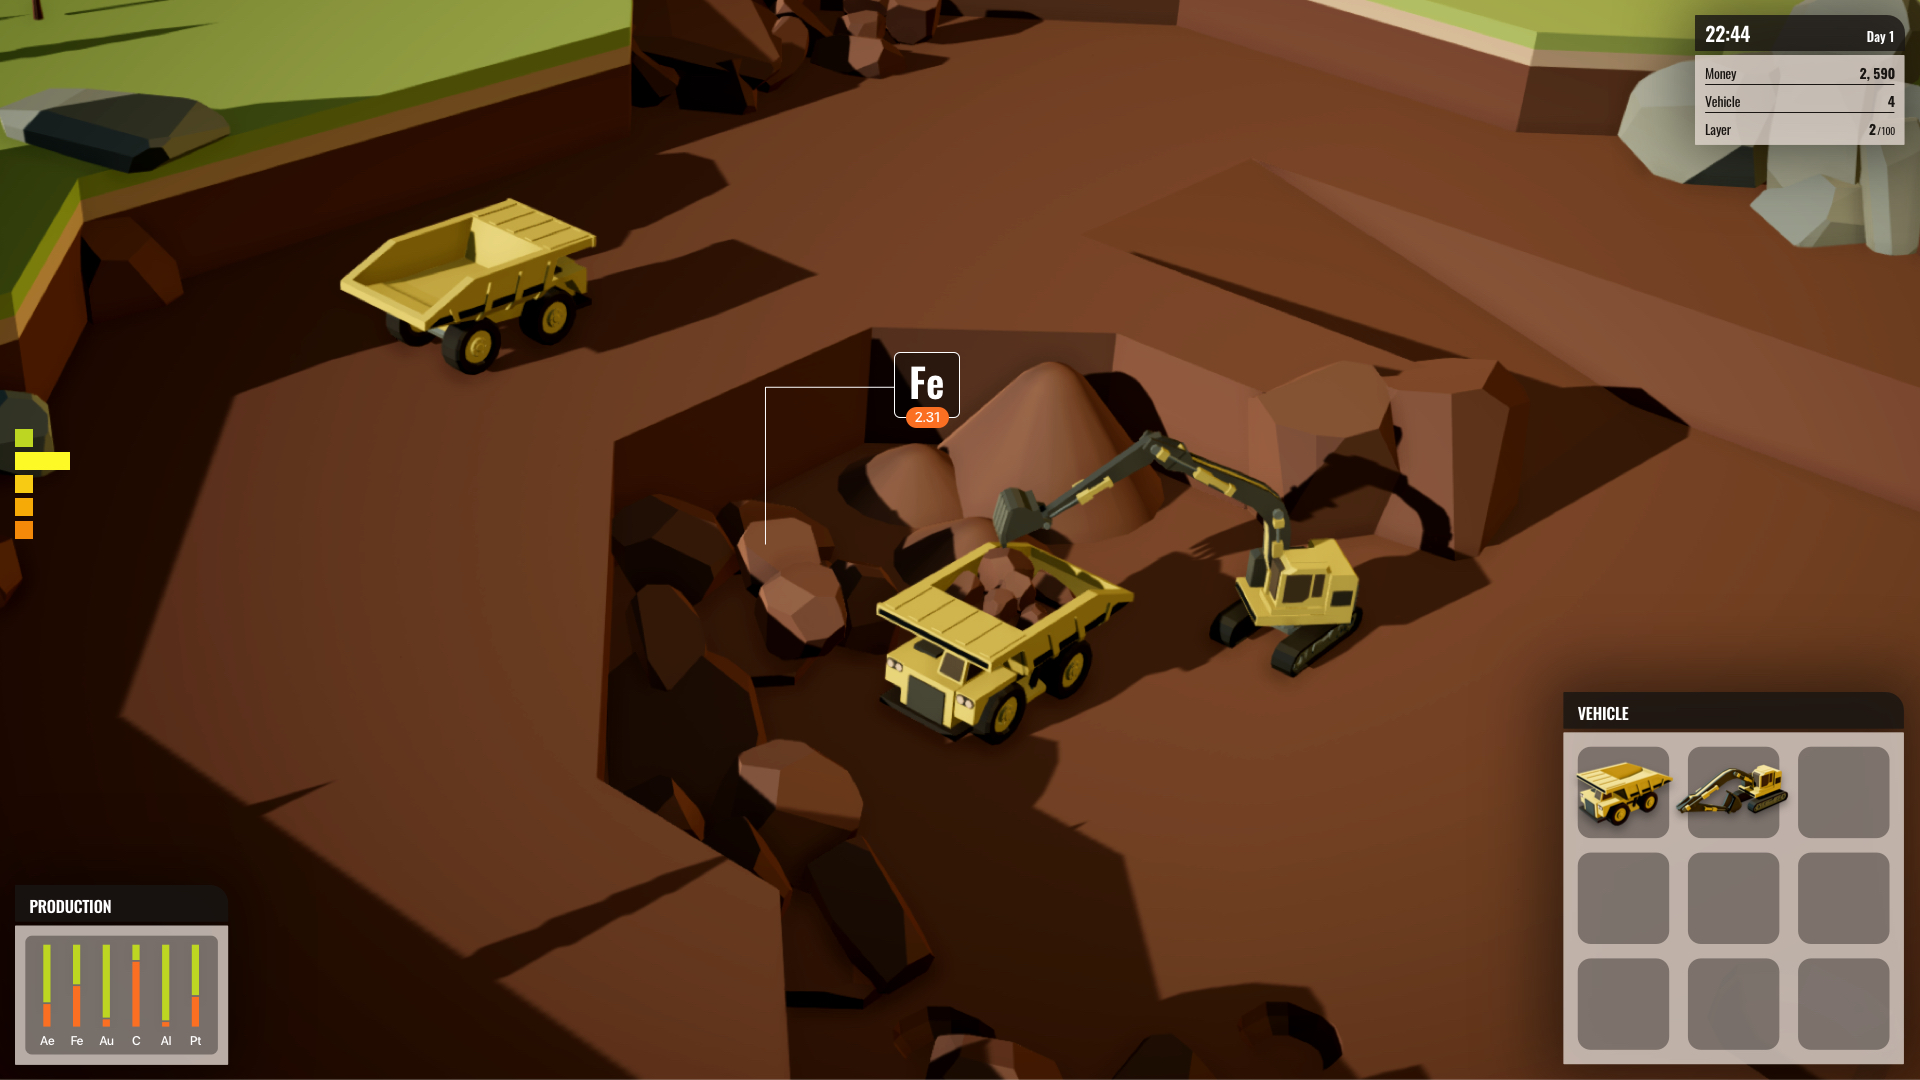 Opencast Mining. Игры про майнинг. Игра Coal Mining Simulator для компьютера Cover. Eco game Mining. Mining game игра